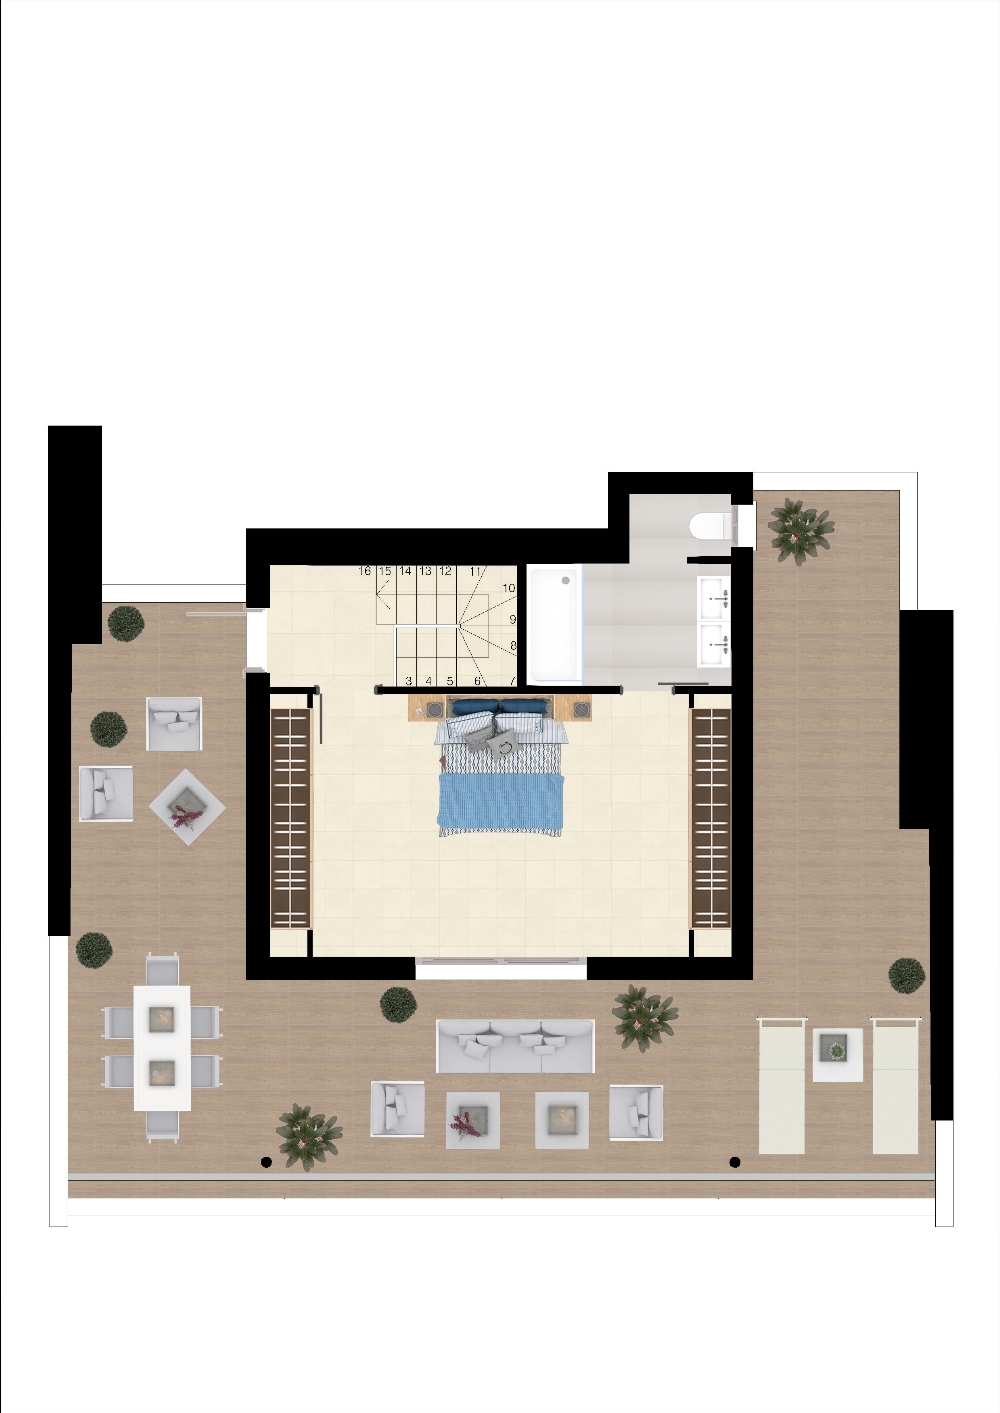 Examplor floor plan penthouse